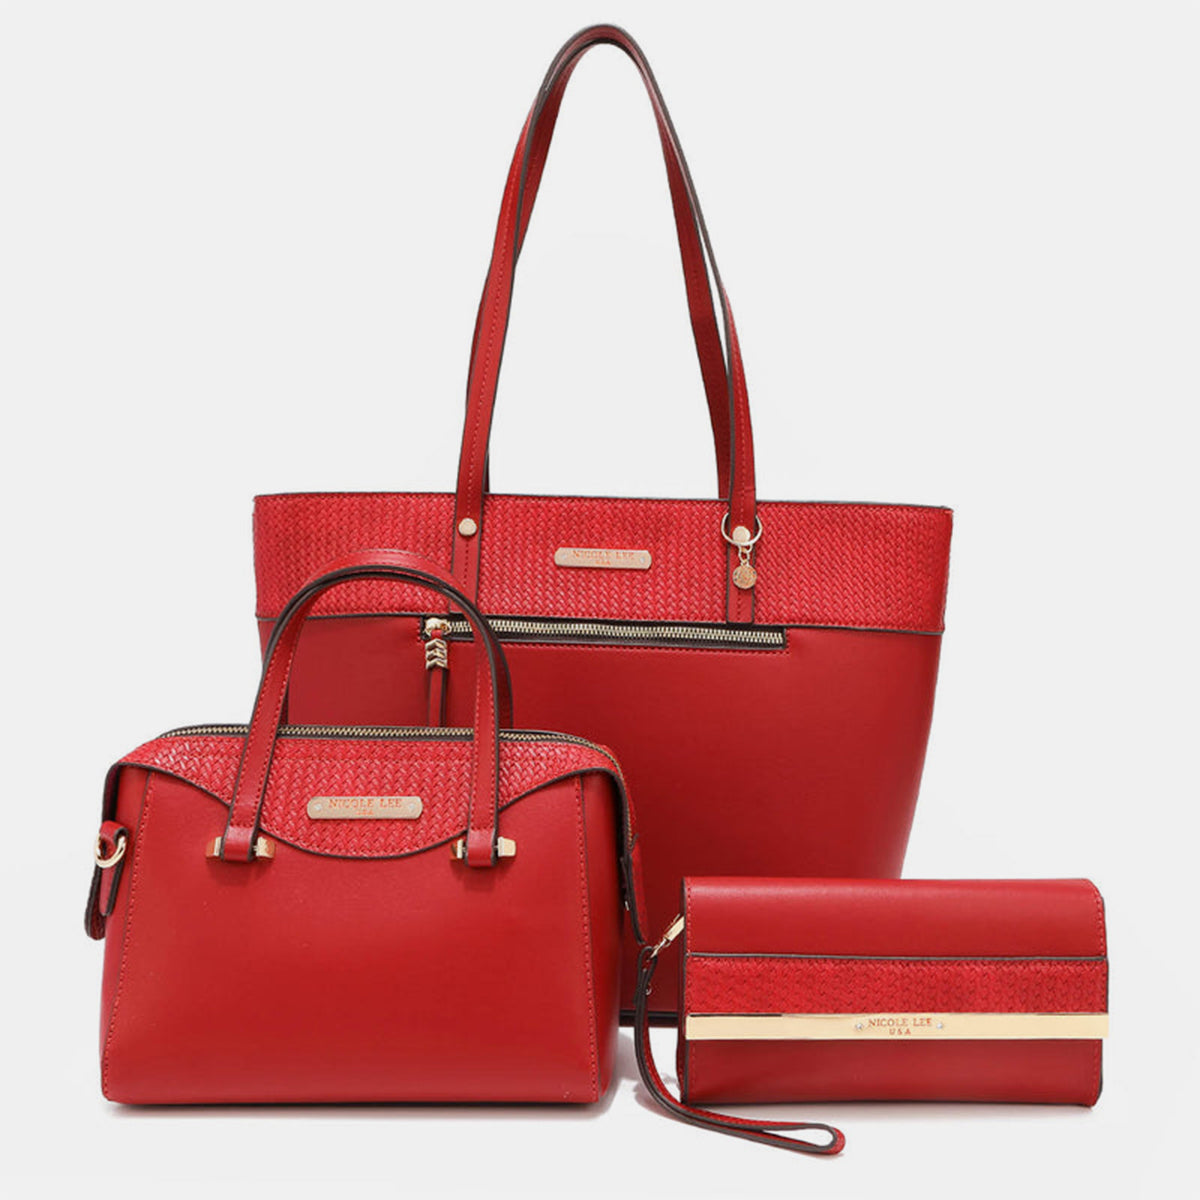 Nicole Lee USA 3-Piece Handbag Set Red One Size